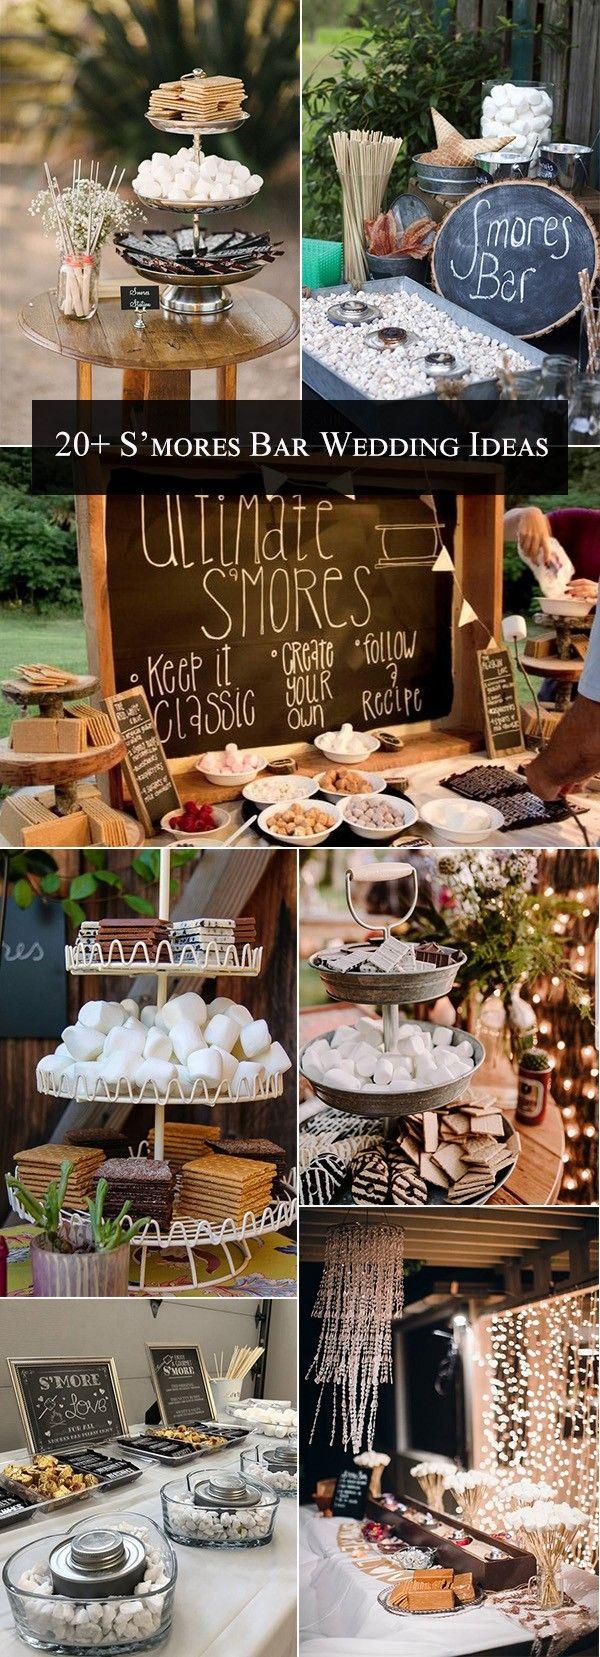 زفاف - Trending-20 Sweet S’mores Bar Wedding Ideas For Fall And Winter - Page 2 Of 2